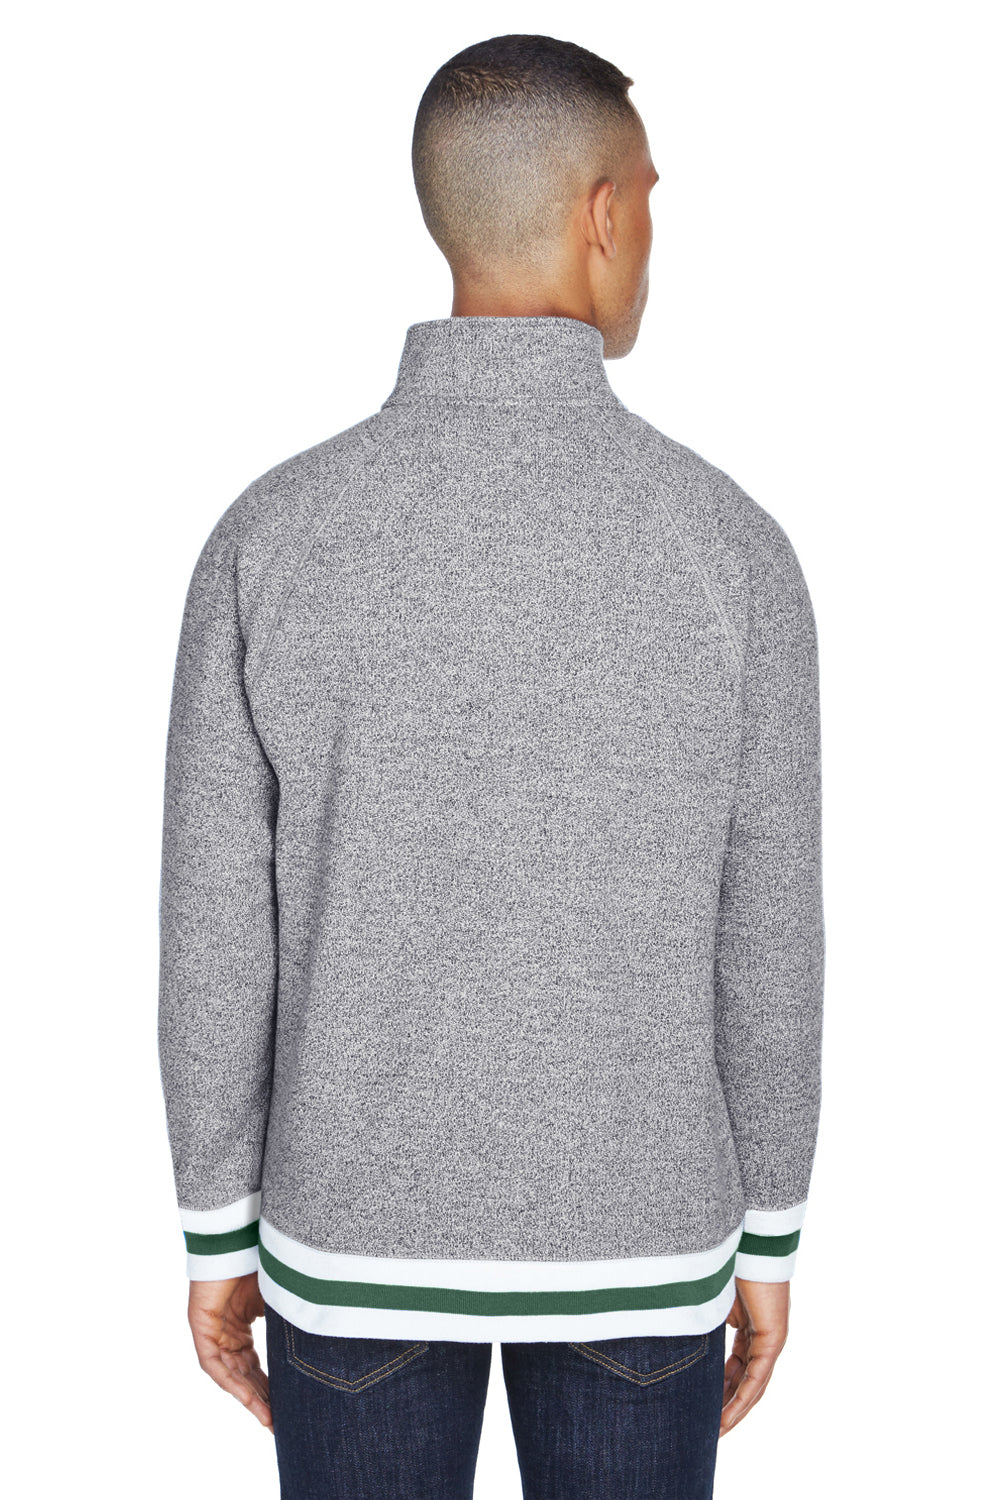 J America JA8703 Mens Peppered Fleece 1/4 Zip Sweatshirt Grey/Forest Green Back